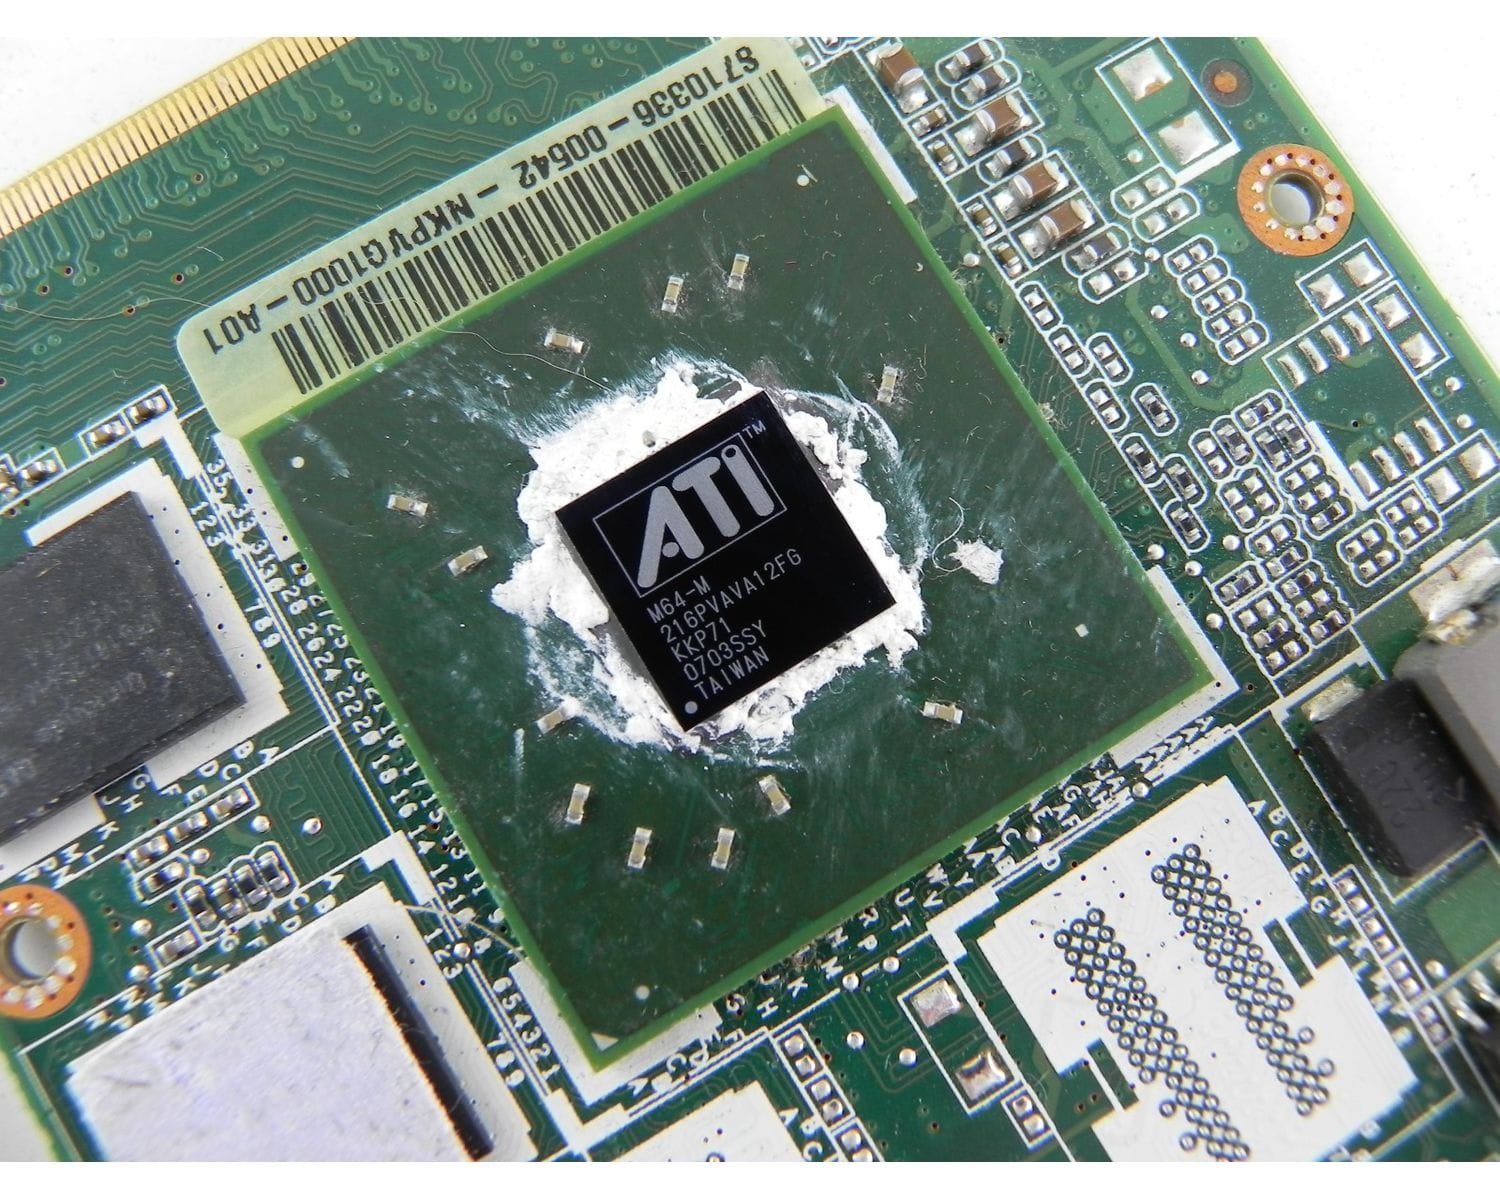 Ati mobility radeon купить. ATI Mobility Radeon x2300 (ASUS). ATI Mobility Radeon x1270. Видеочип ATI 218bapaga12fg. Чип ATI m64-m 216pvava12fg.